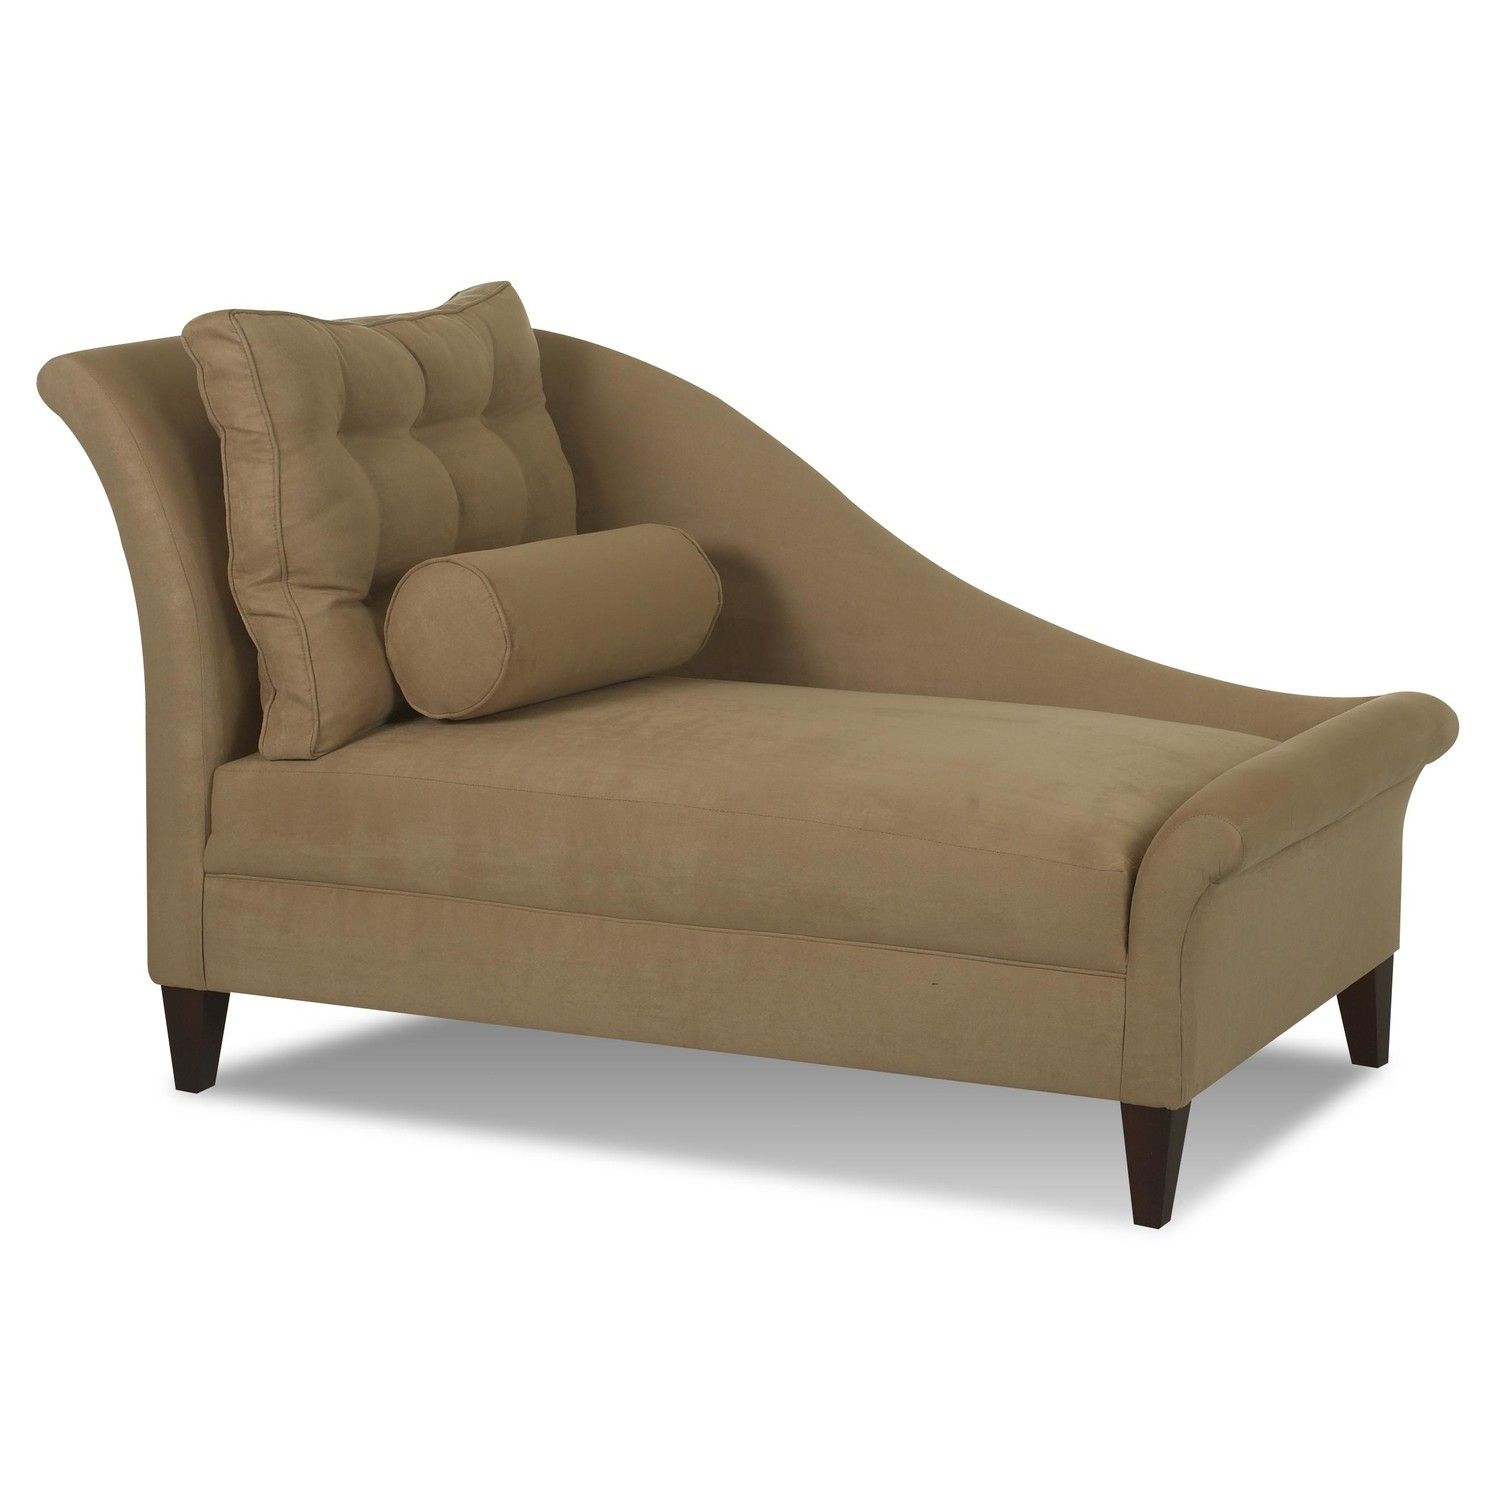 Sofa Lounge Chairs | Sofa Ideas